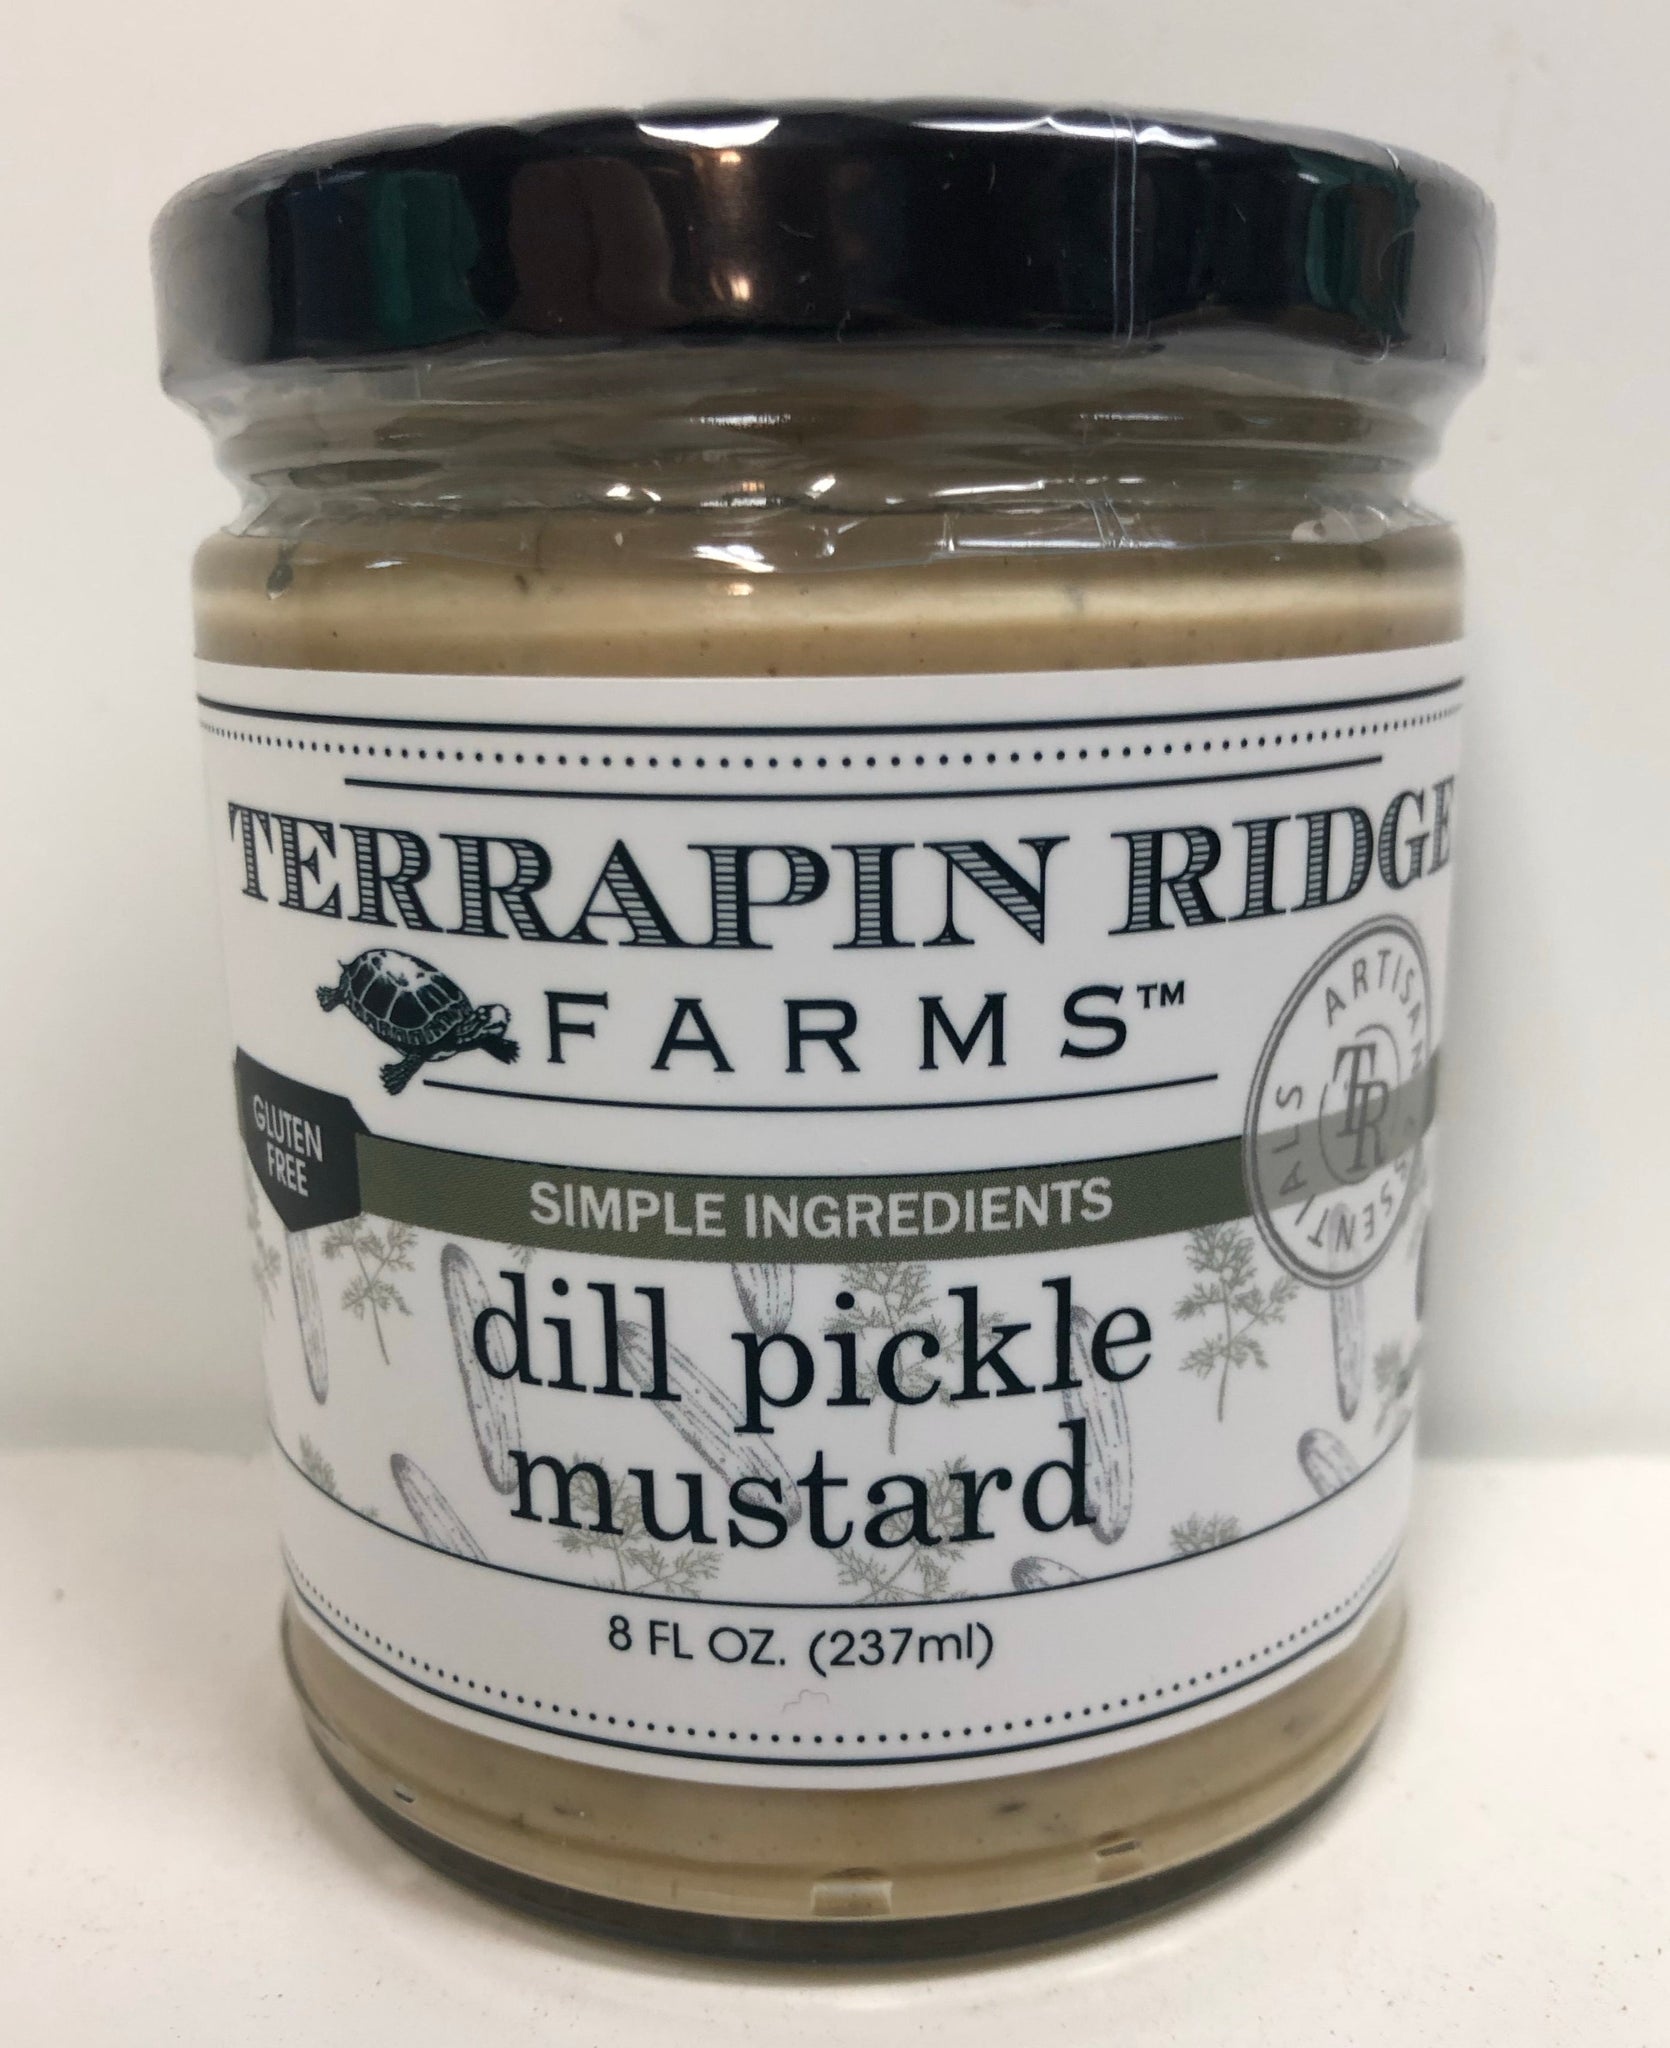 Dill Pickle Mustard from Terrapin Ridge Farms